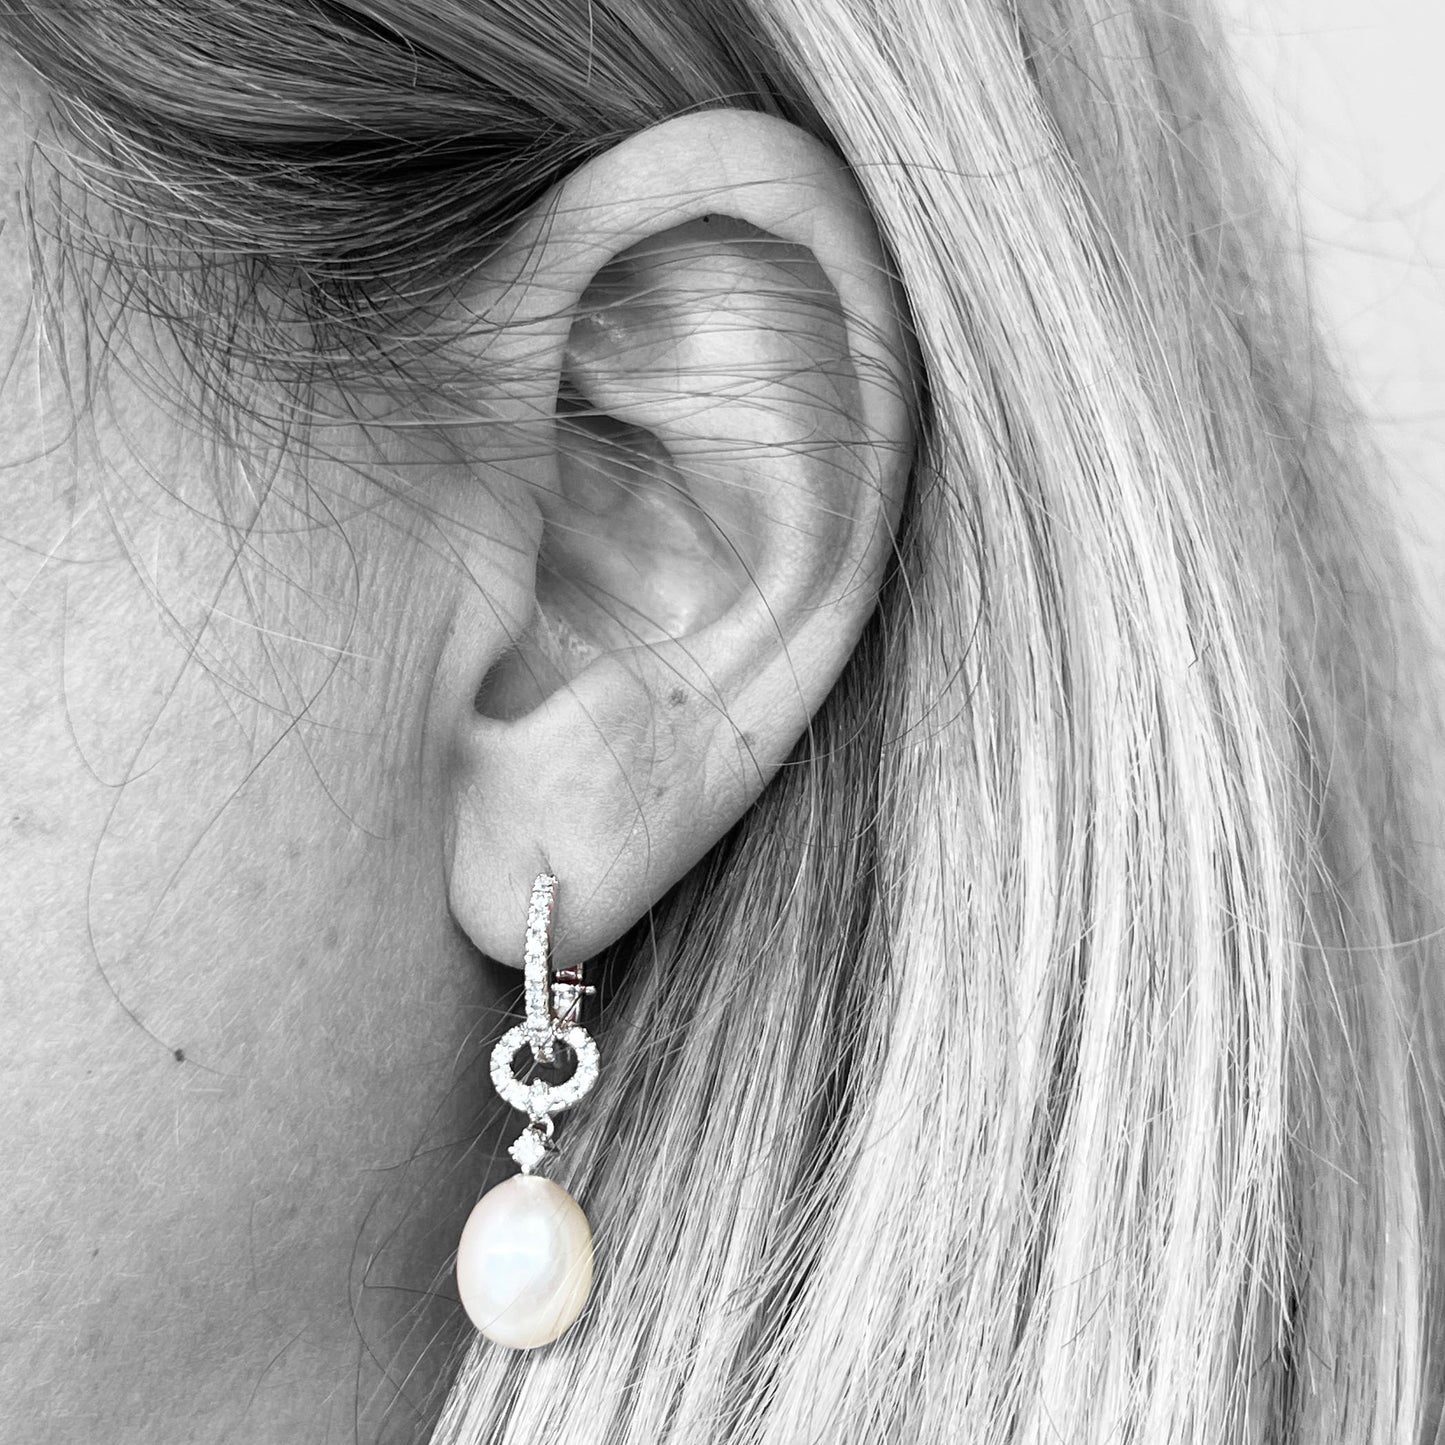 18kw Pearl and Diamond Dangle Earrings